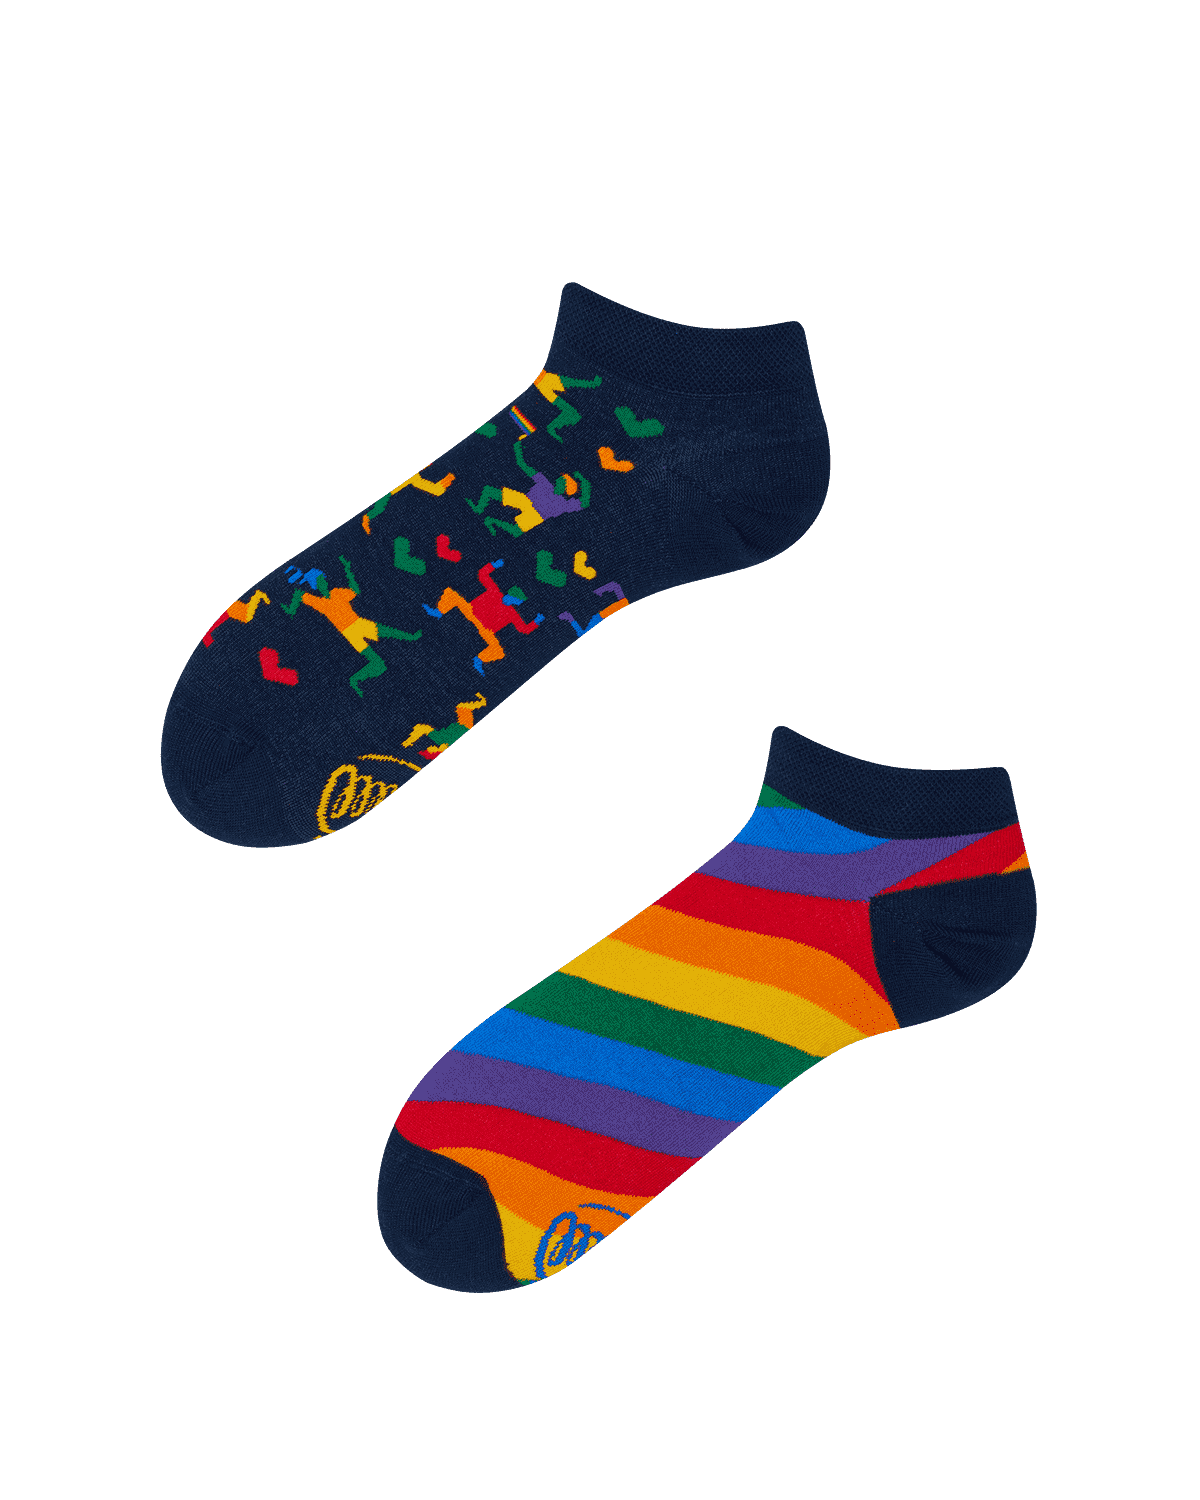 OVER THE RAINBOW LOW - Rainbow low socks